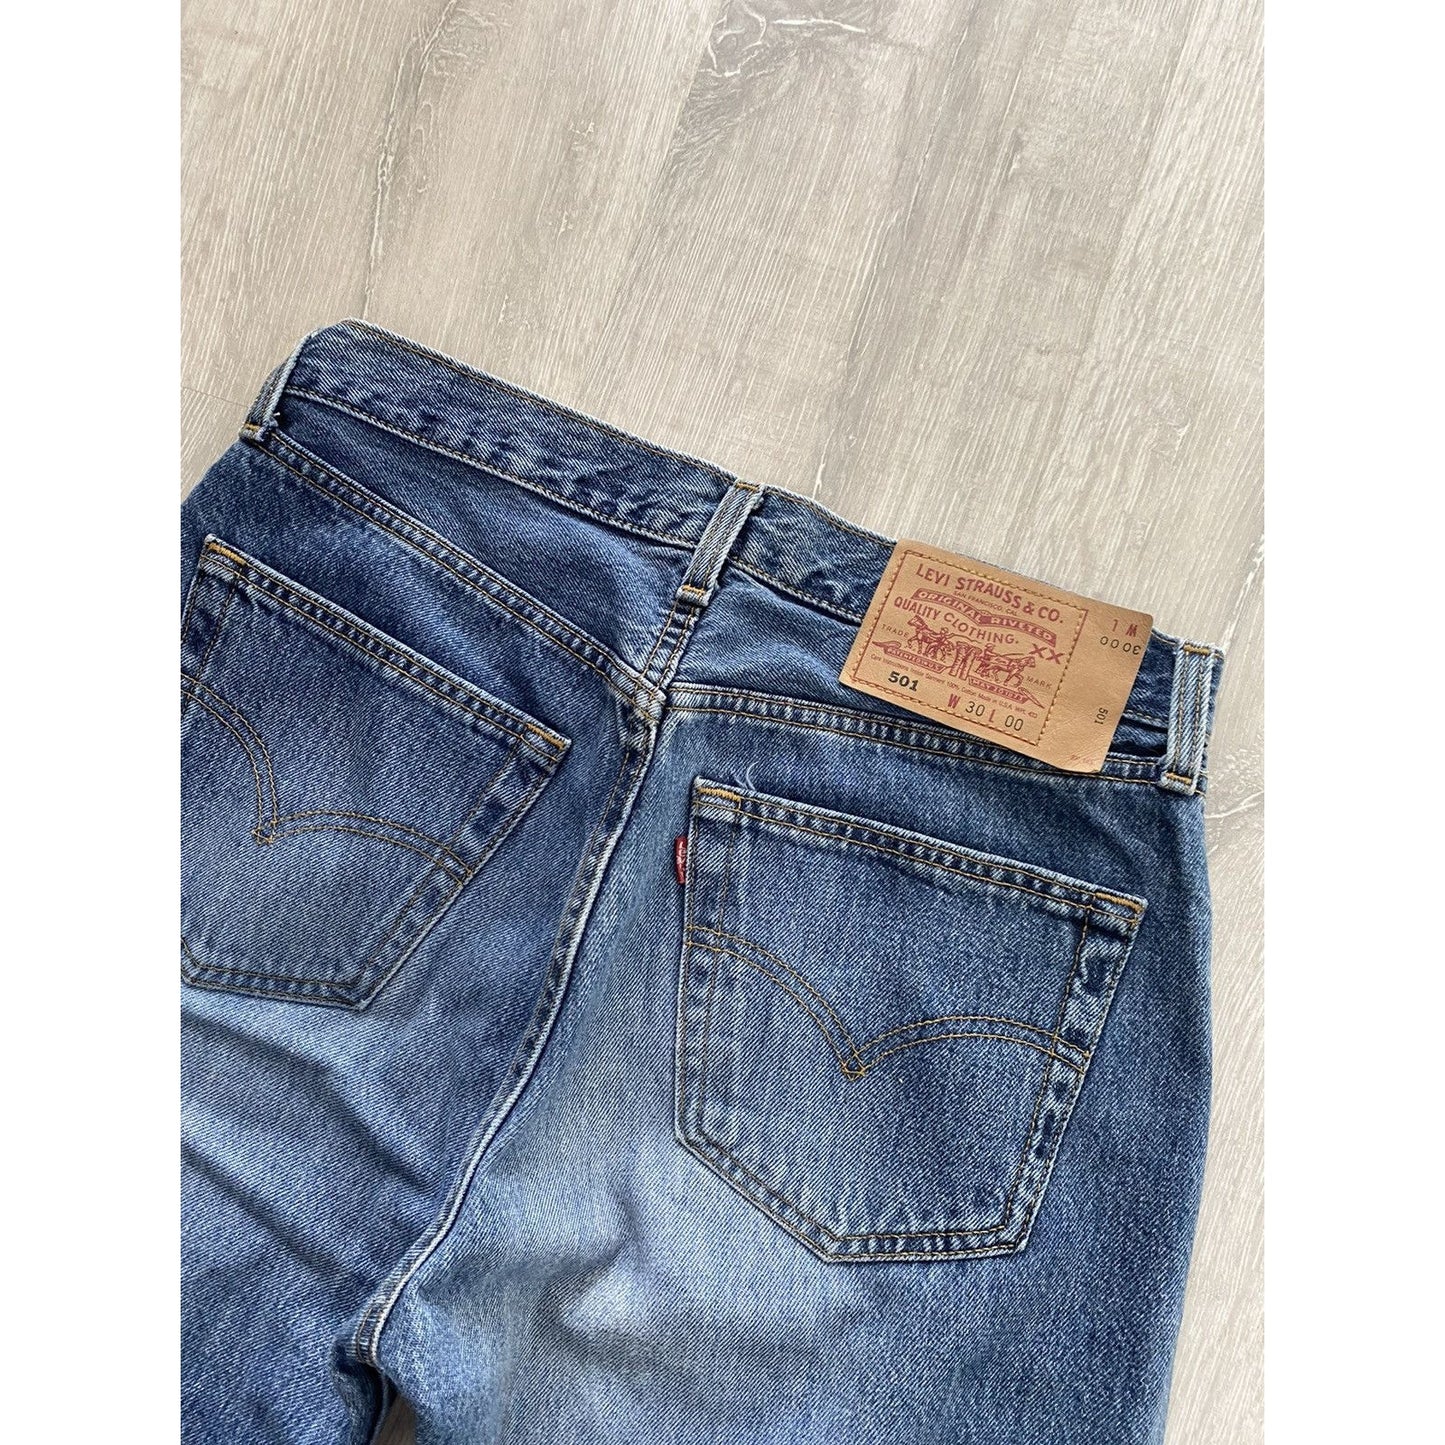 Levi’s 501 vintage denim shorts blue navy jeans jorts made in USA